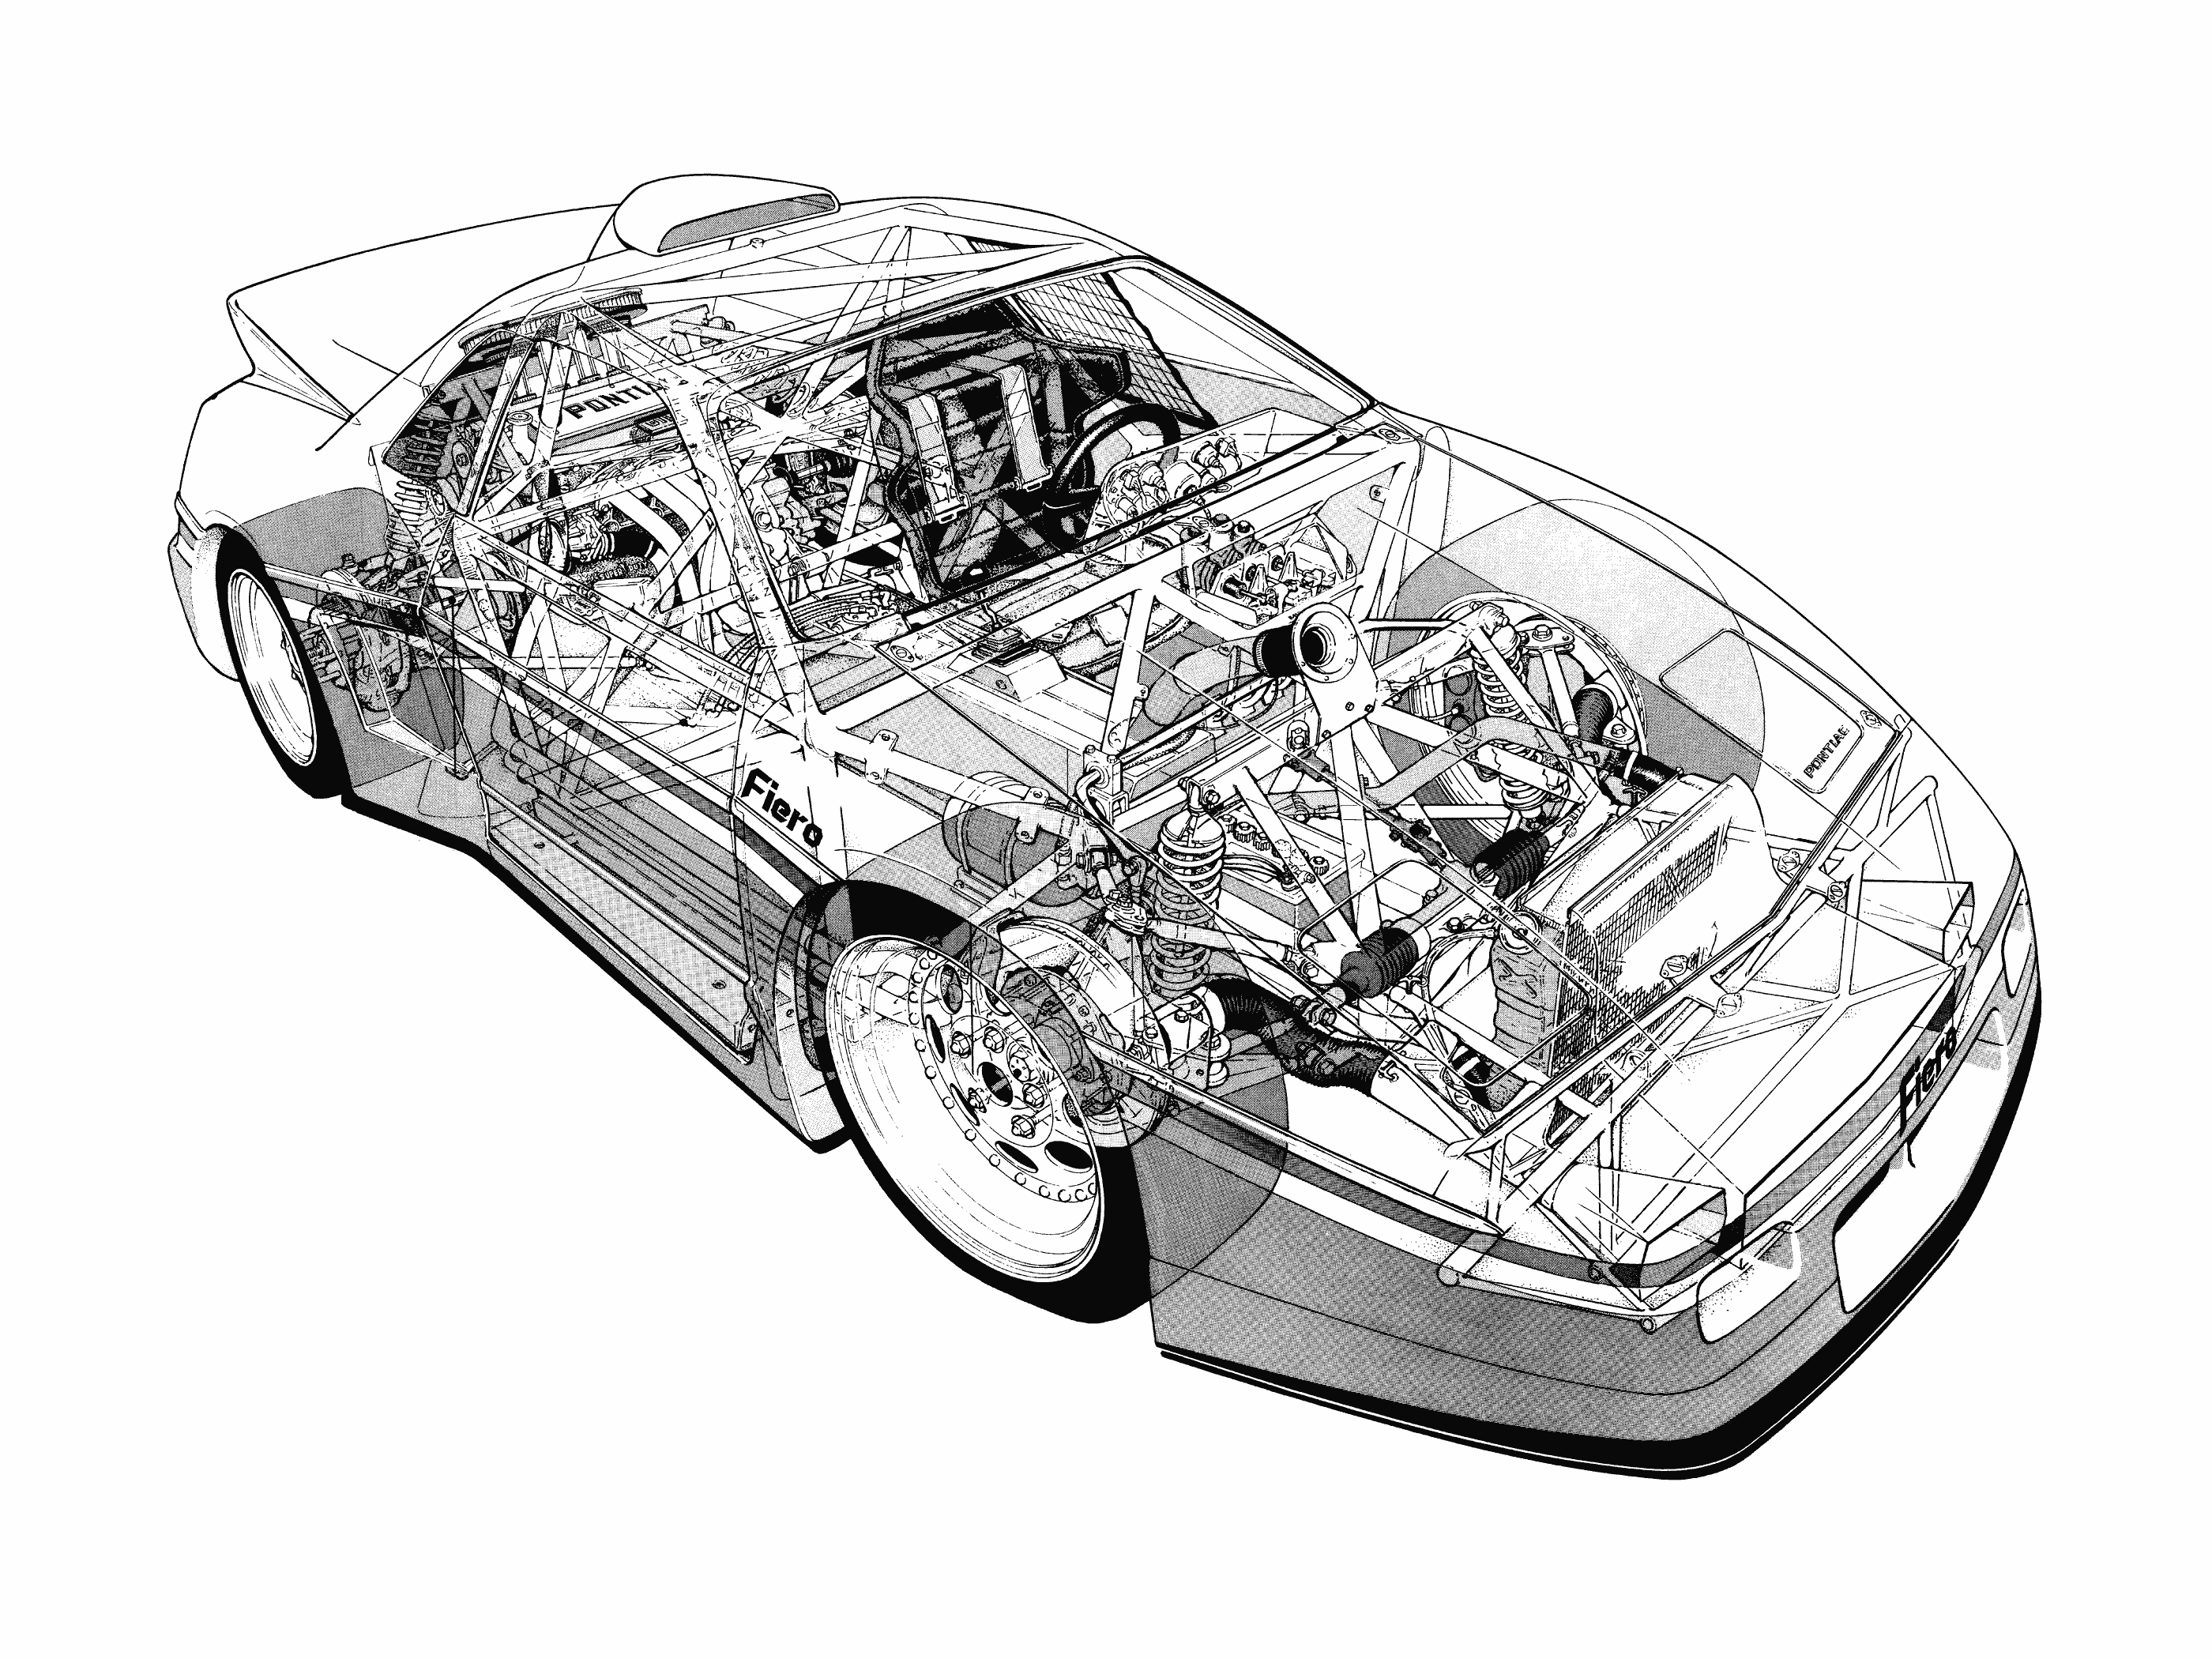 Pontiac Fiero SD4 cutaway